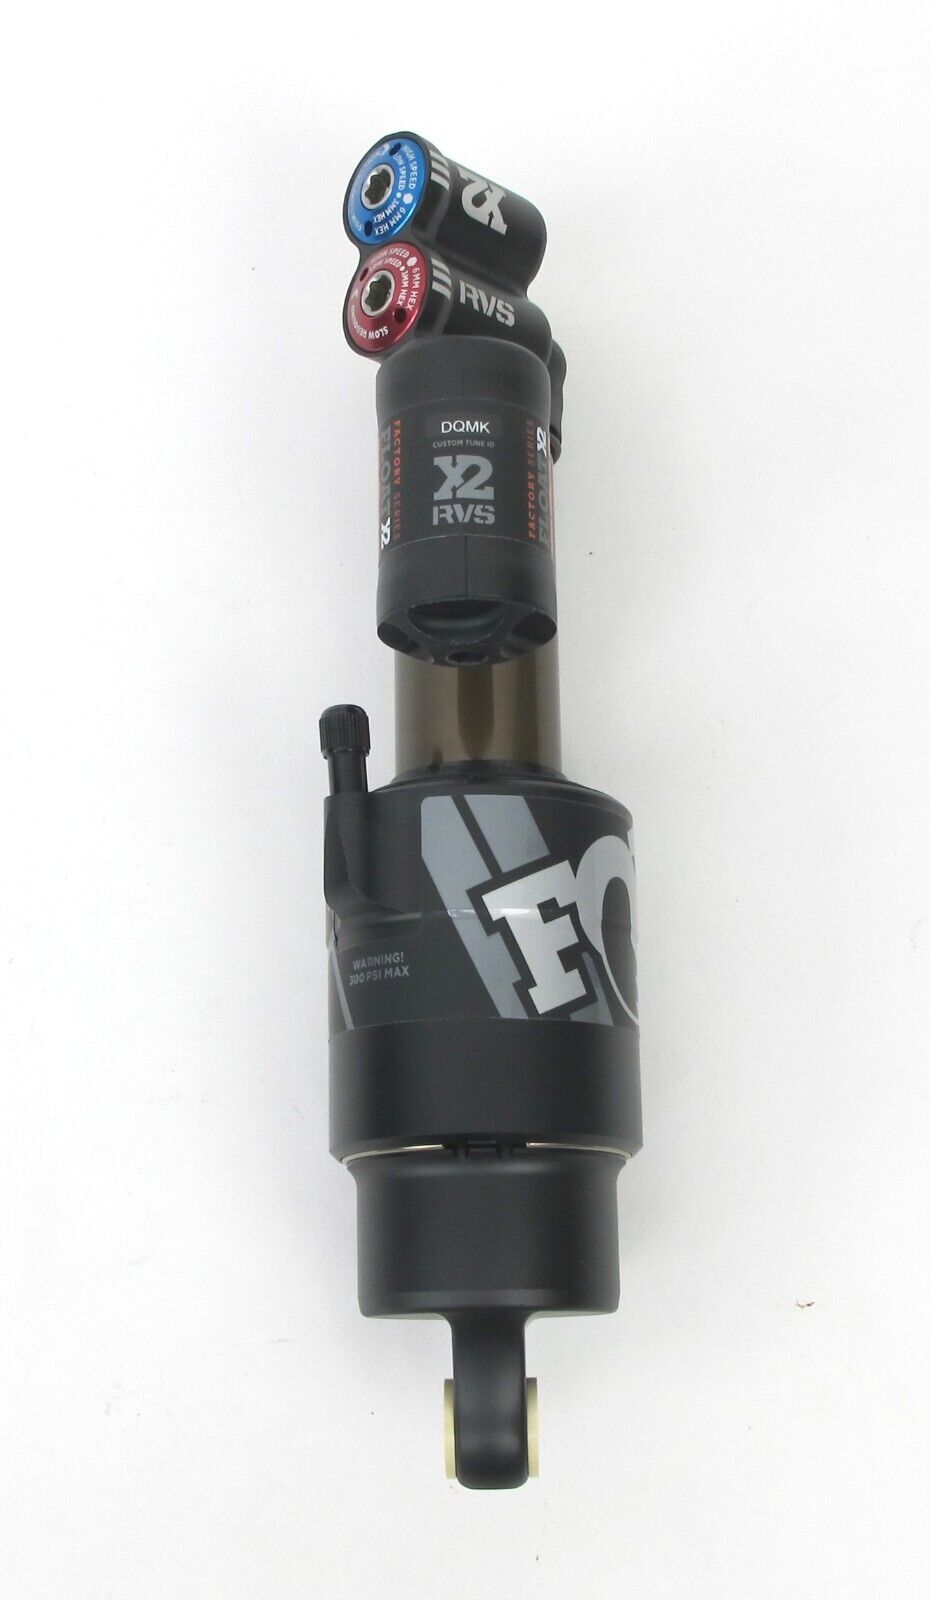 FOX Factory X2 Float 8.75" x 2.75" HSC LSC HSR LSR Rear Shock